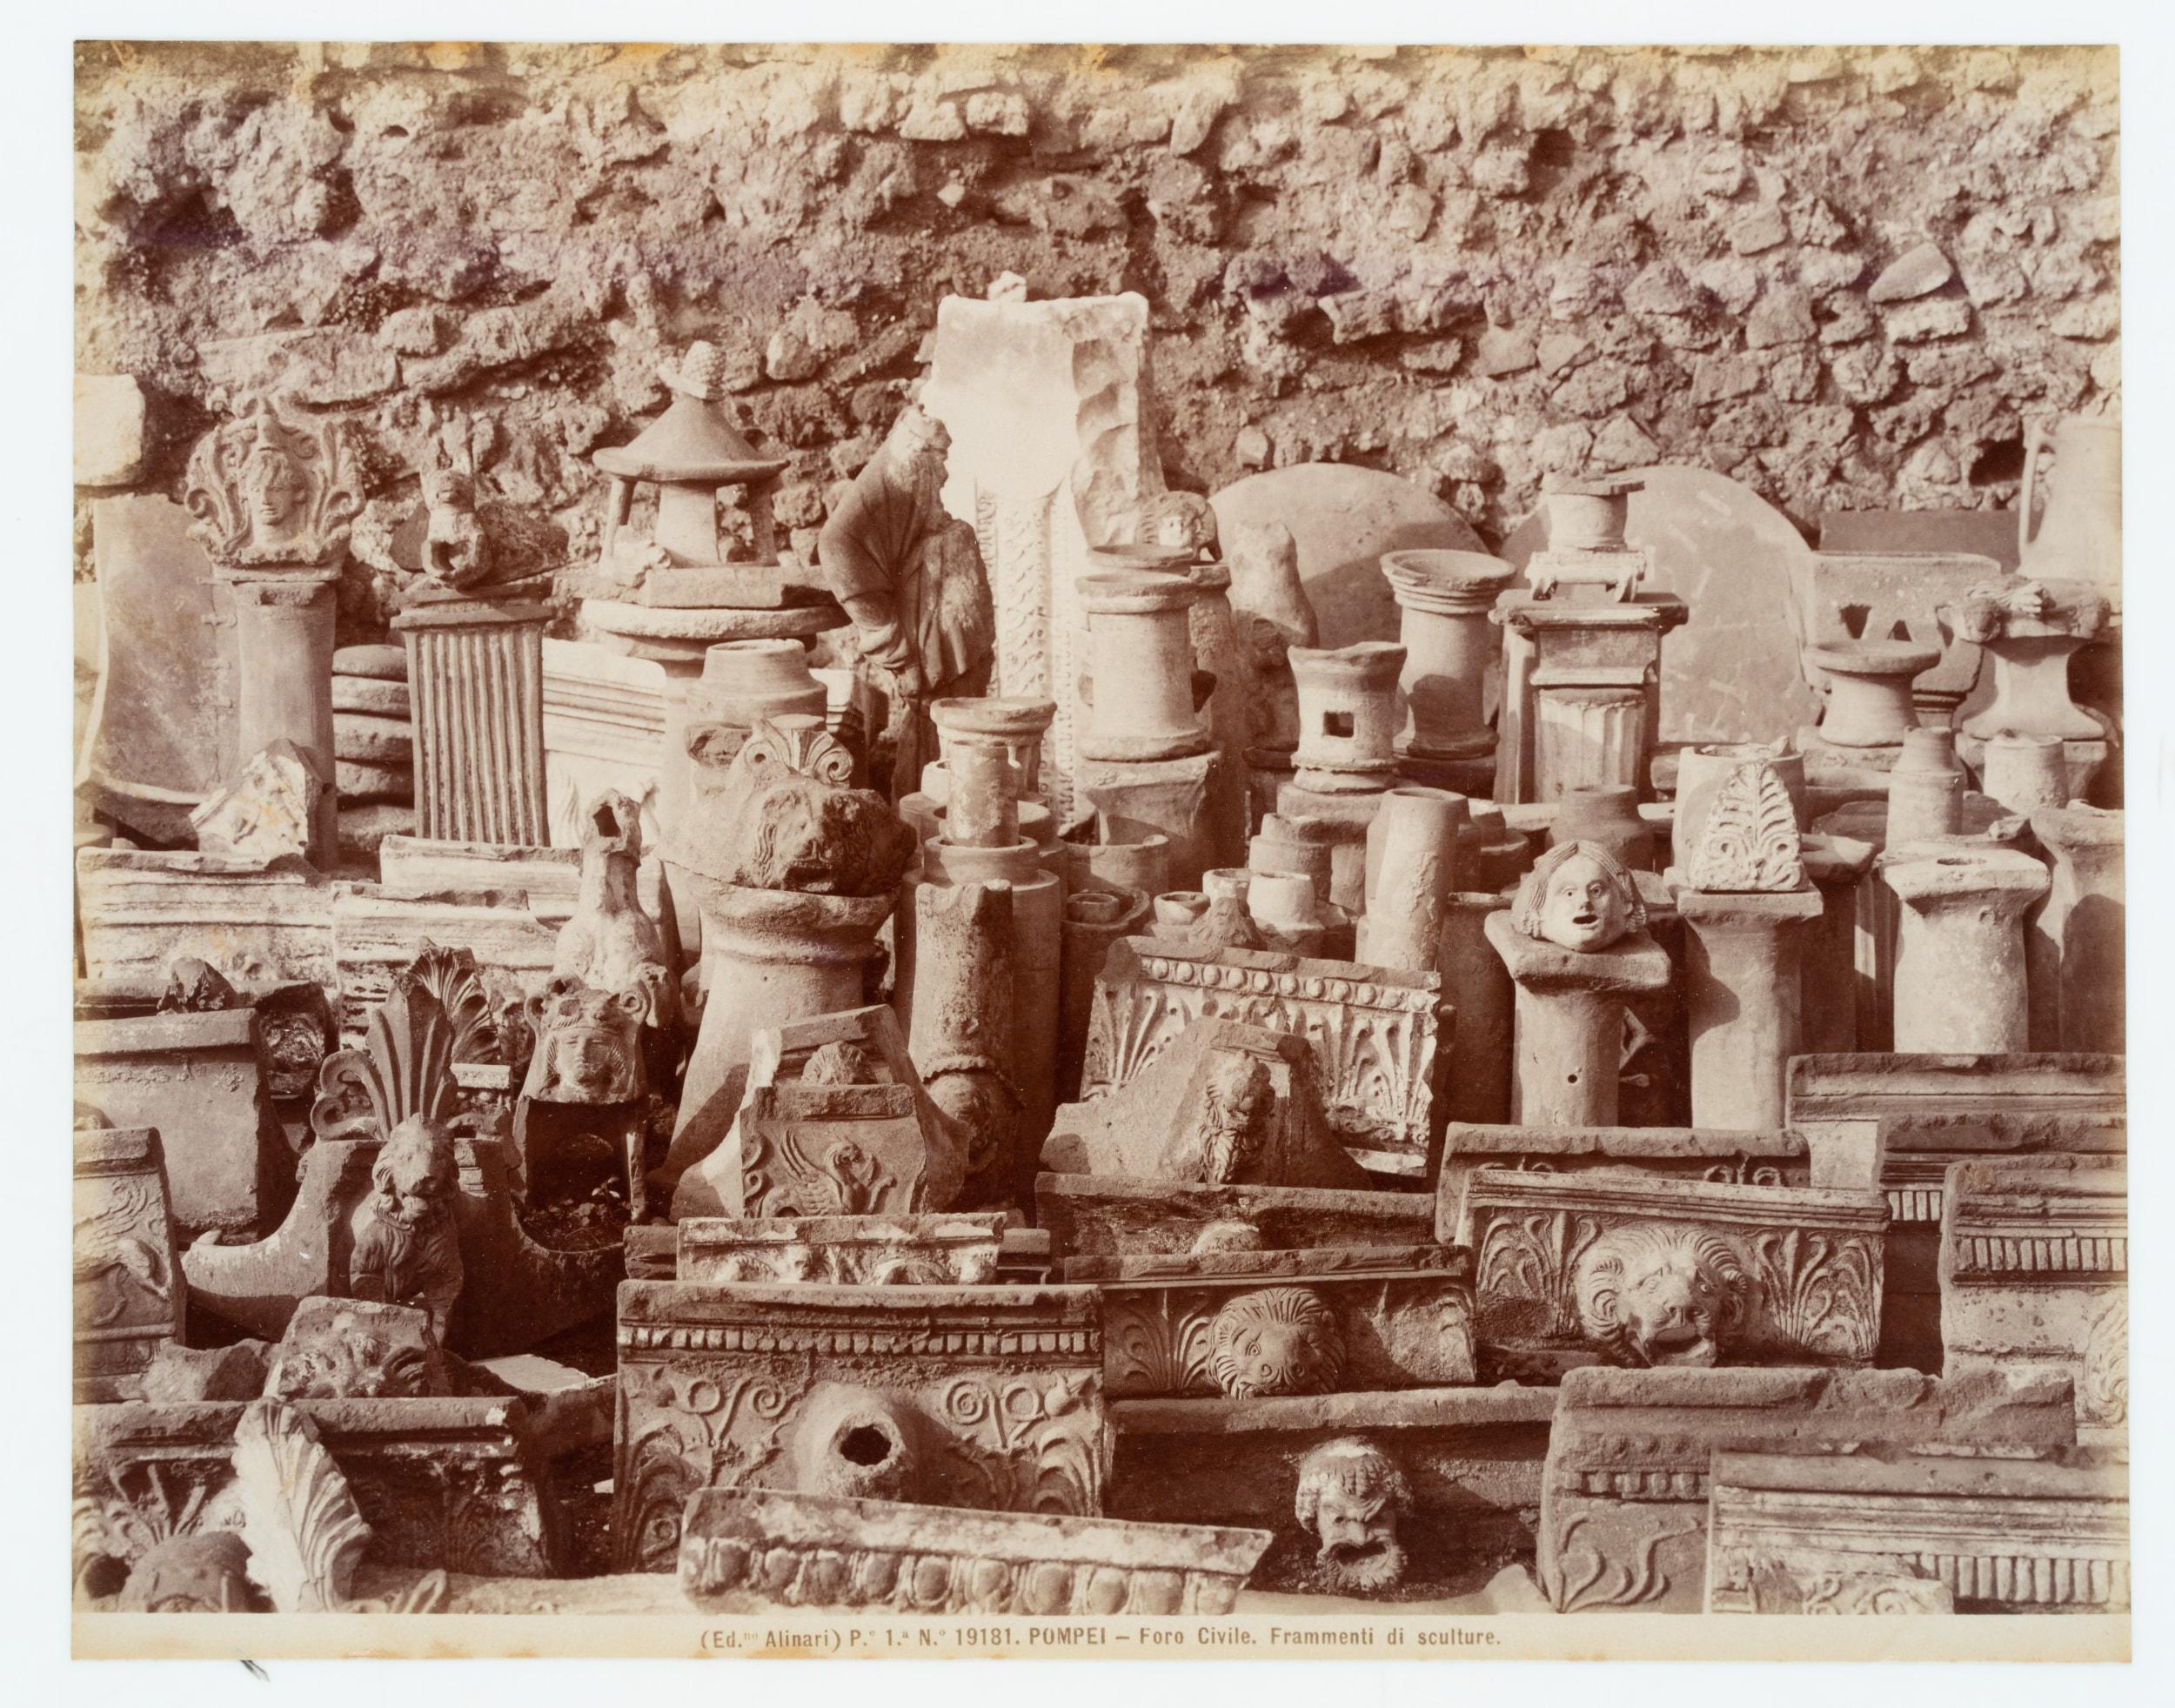 Fragments de sculpture, Pompeii en vente 1